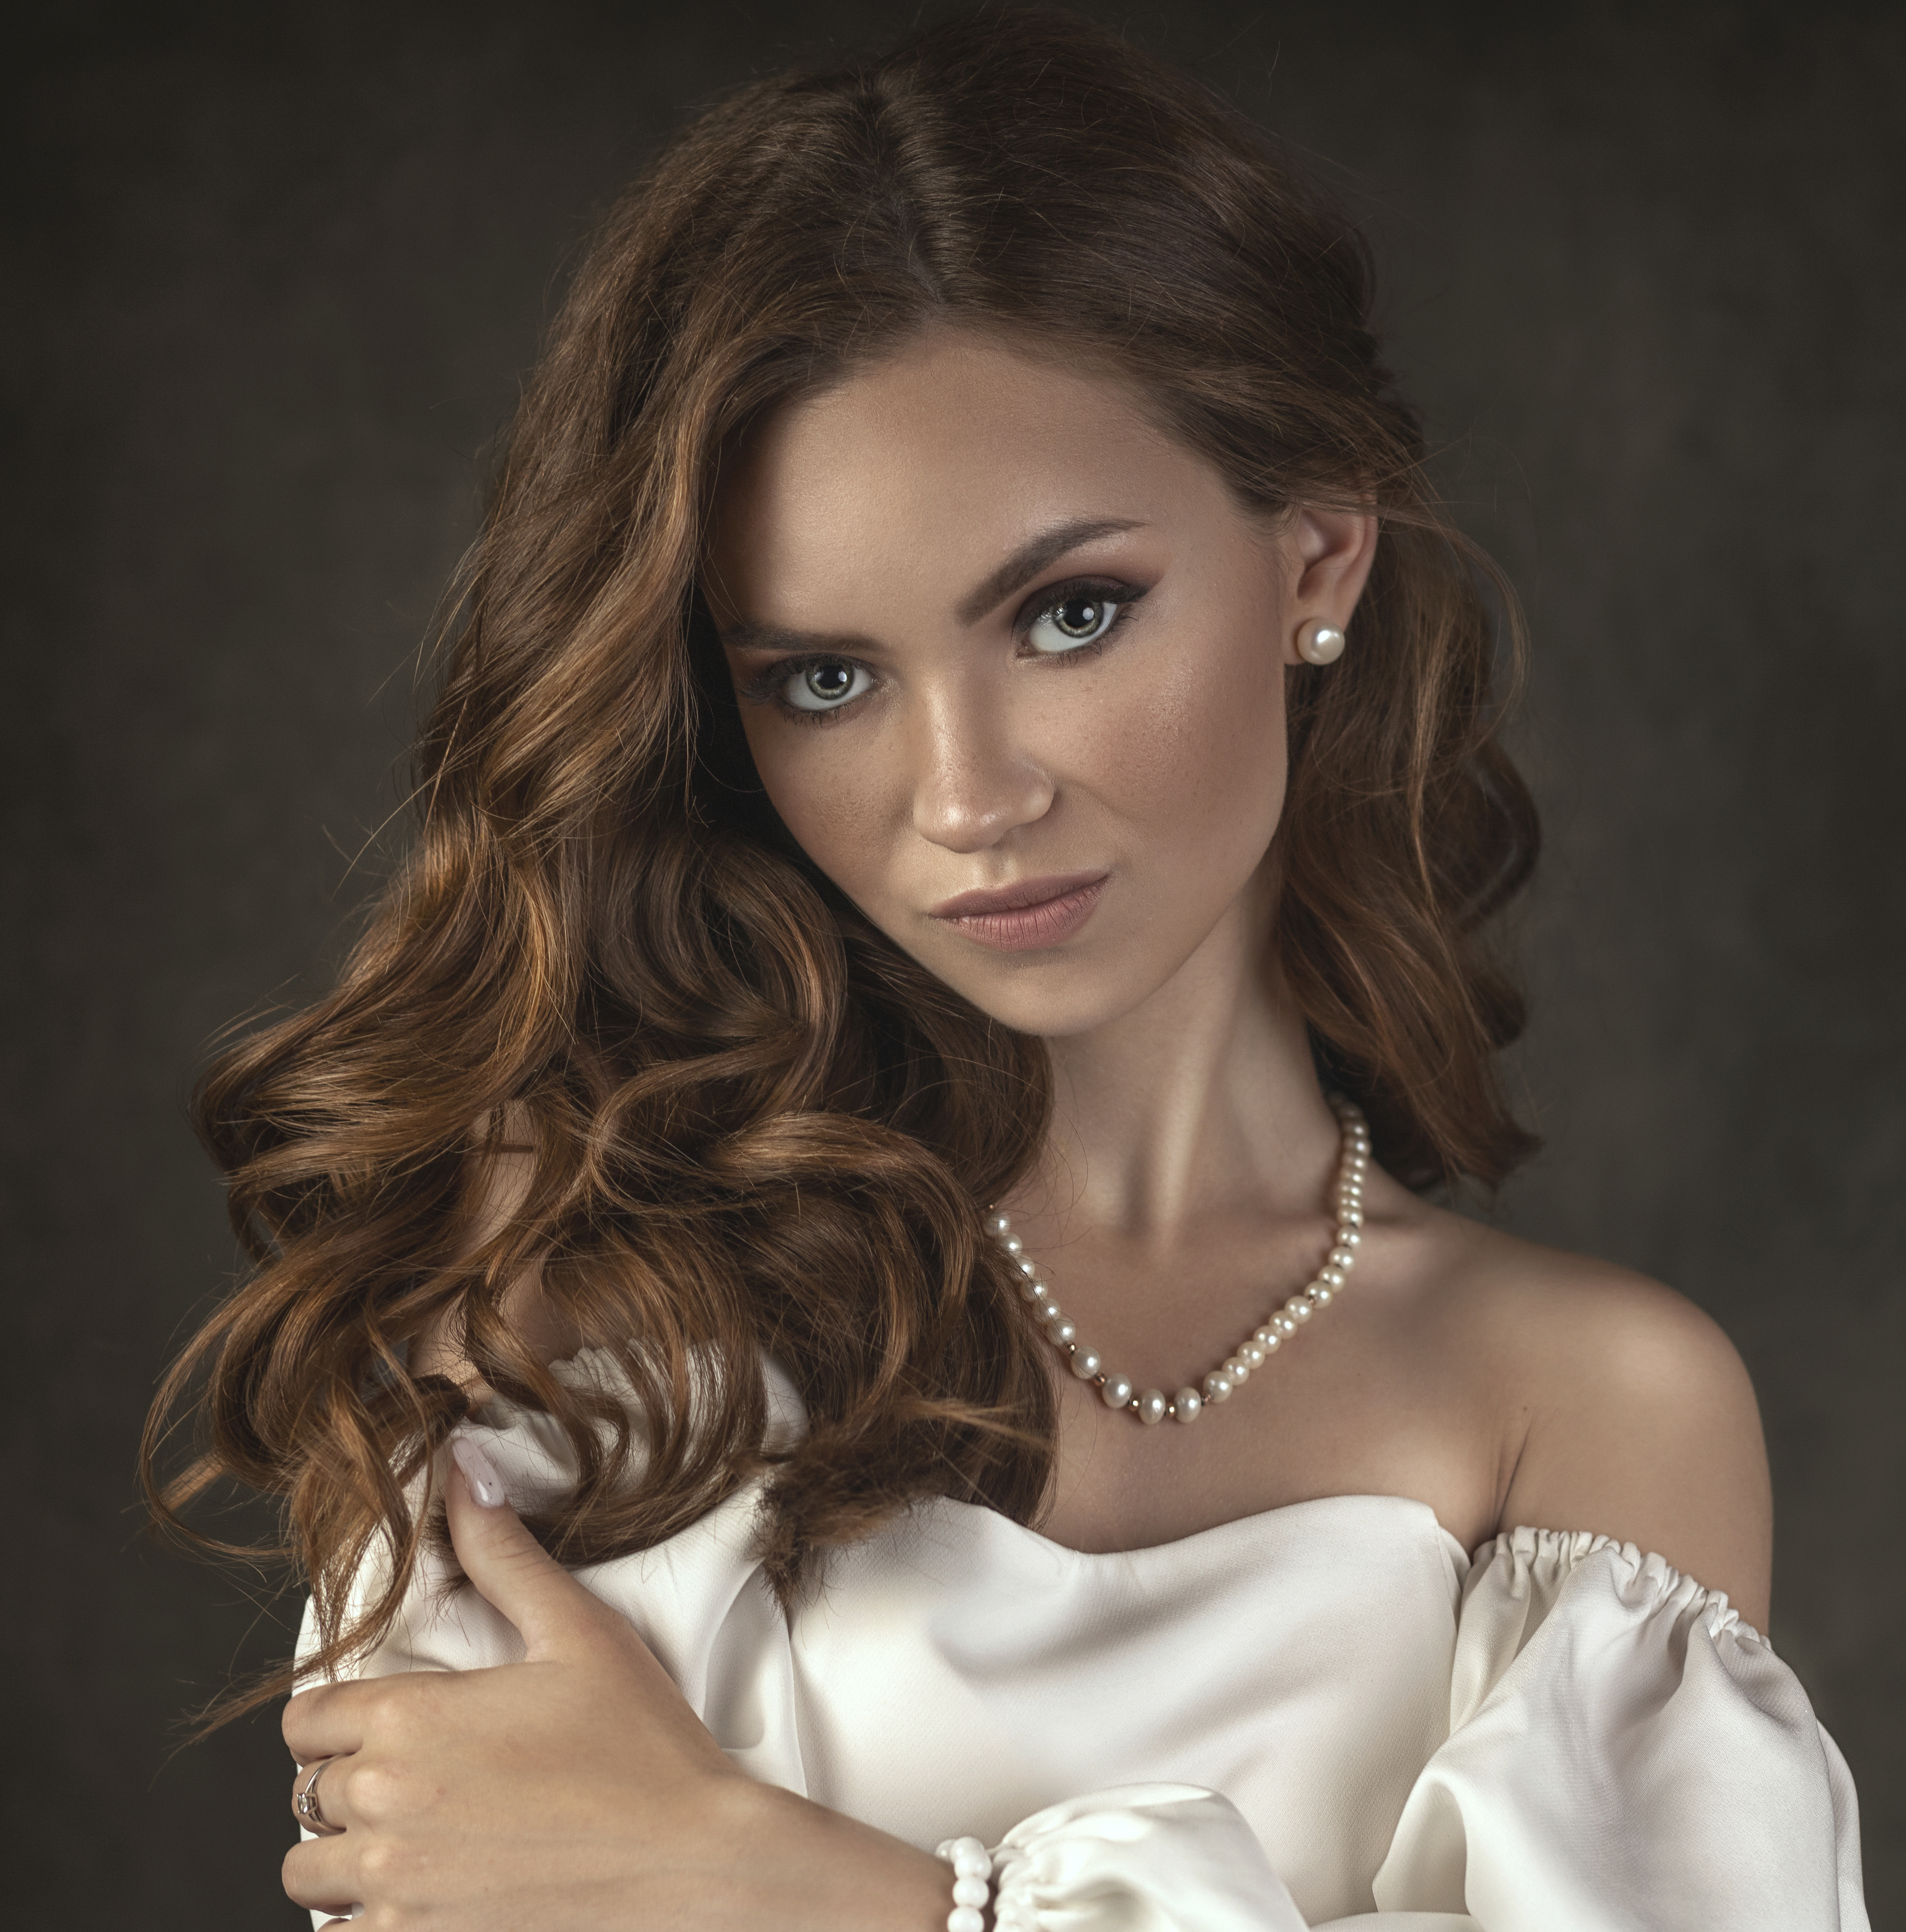 Aleksey Sologubov Women Brunette Long Hair Wavy Hair Blue Eyes Portrait Beads Necklace Bare Shoulder 3452x3500